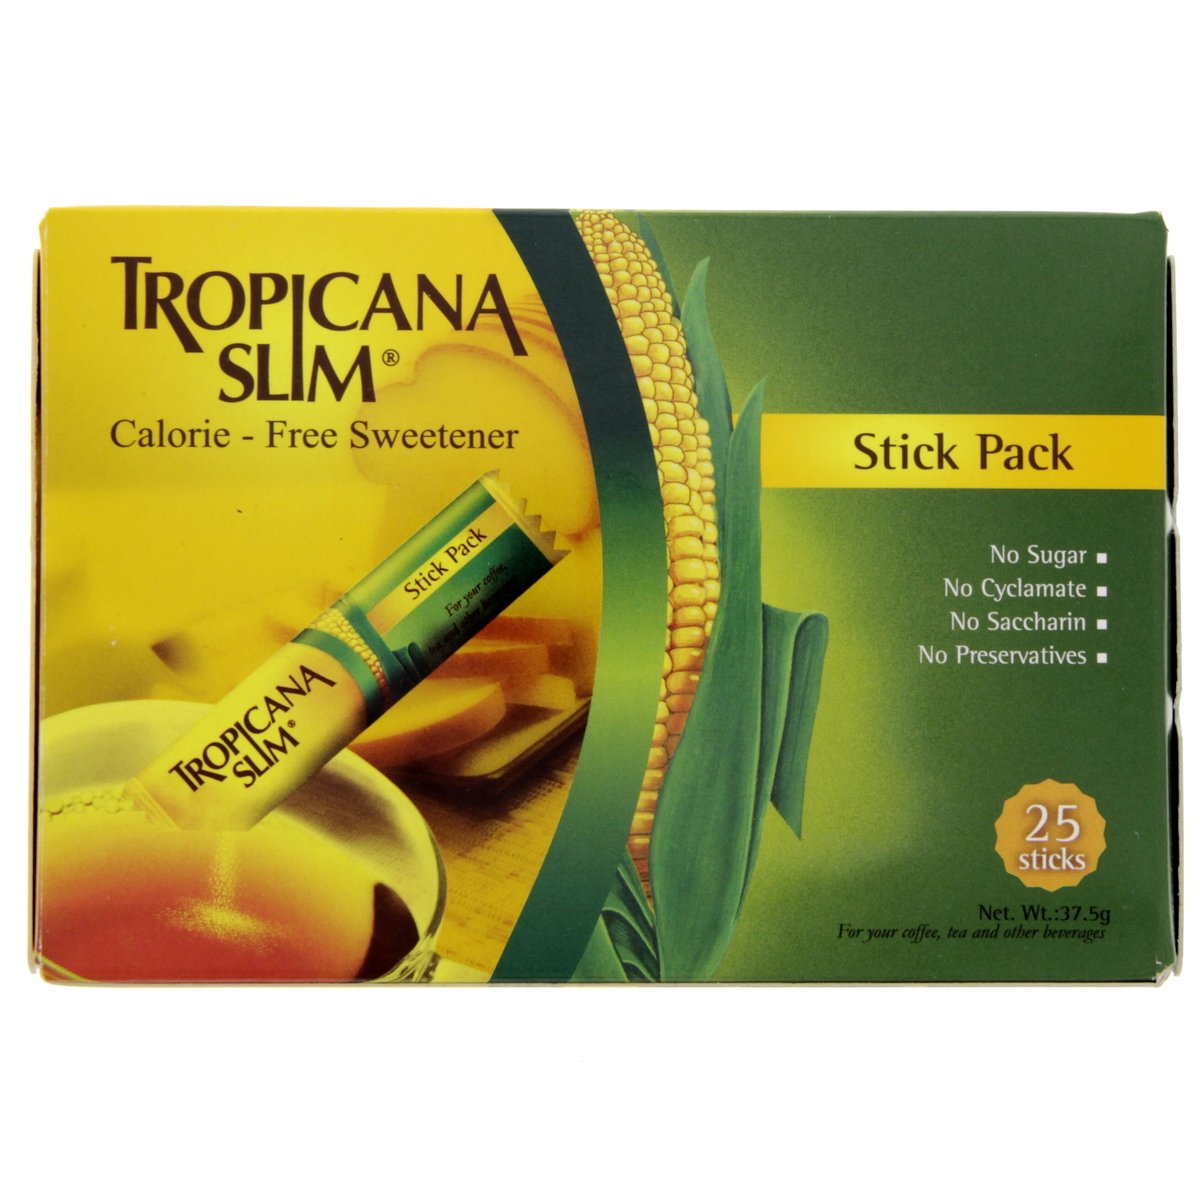 Tropicana Slim Calorie Free Sweetener Stick Pack 25 pcs